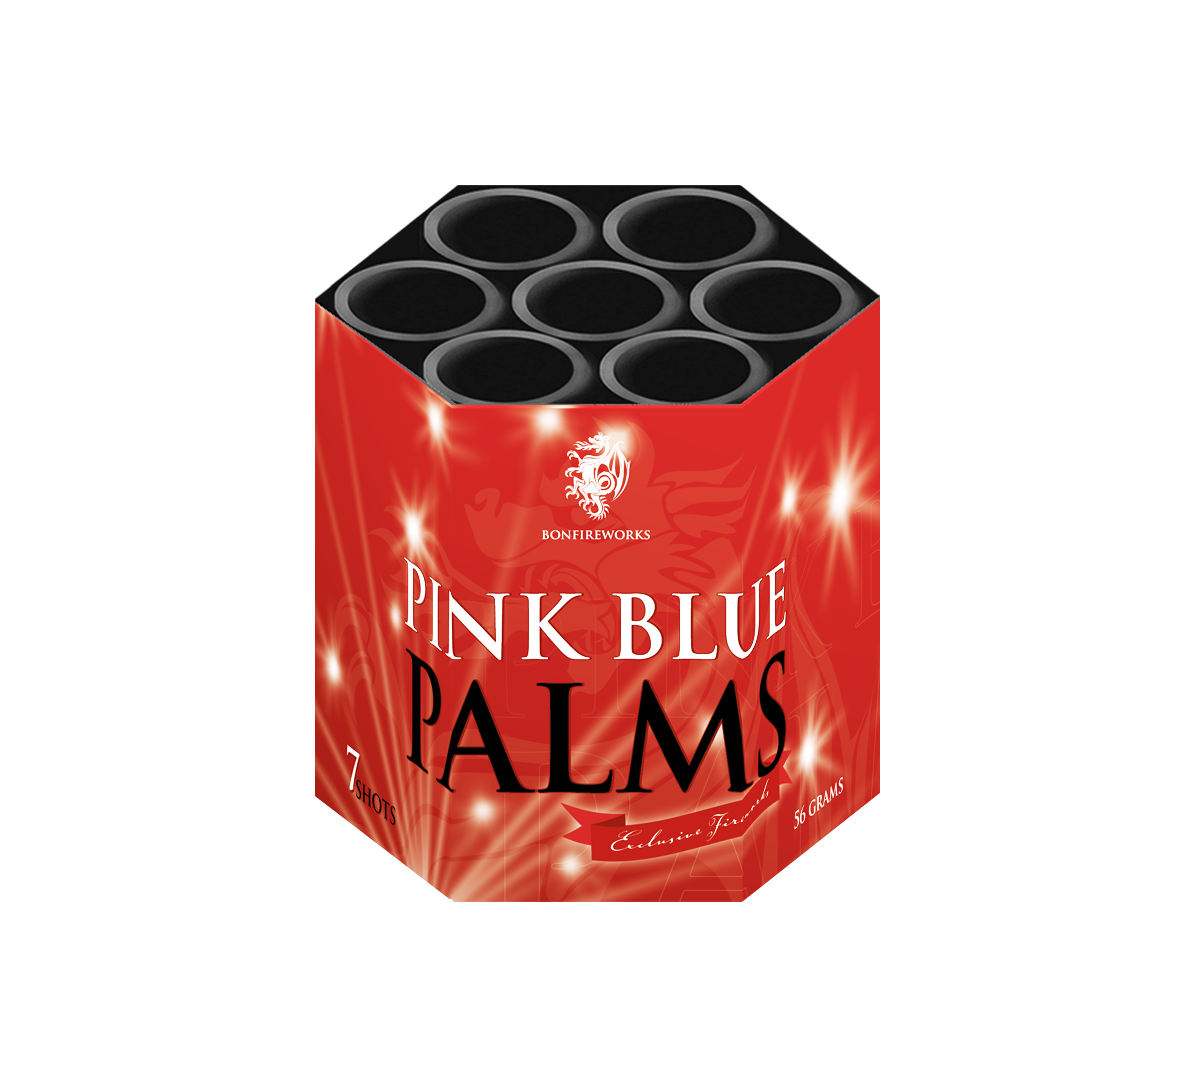 14119-Bonfireworks-Pink-Blue-Palms-Rubro-Feuerwerksbatterie_1198b79d-f937-451d-946f-c7716627603c.png